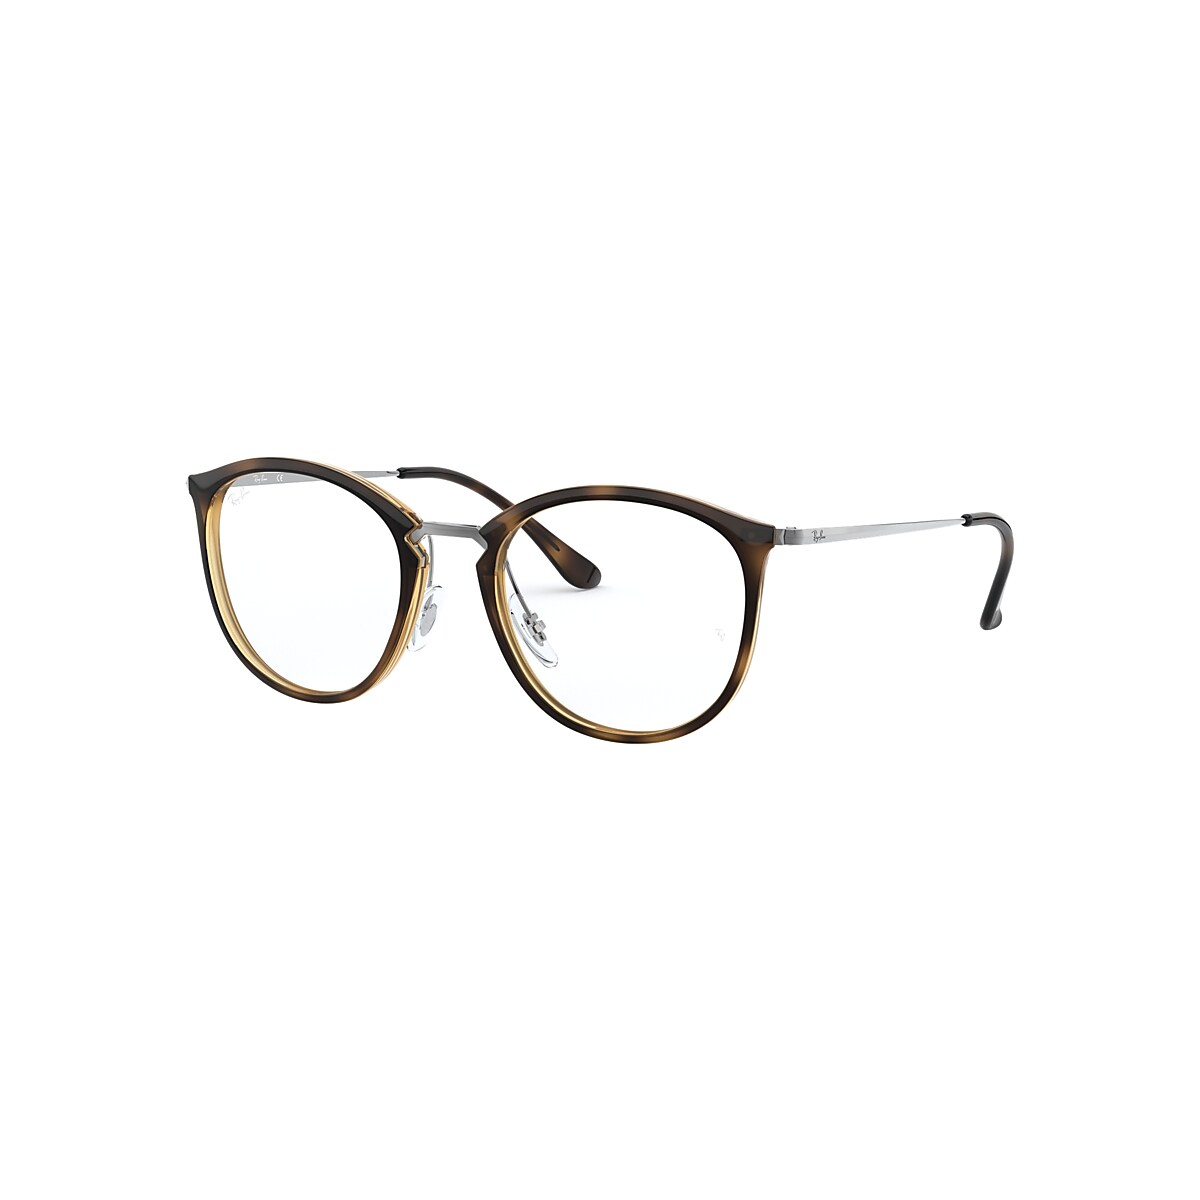 RB7140 OPTICS Eyeglasses with Havana Frame - RB7140 - Ray-Ban